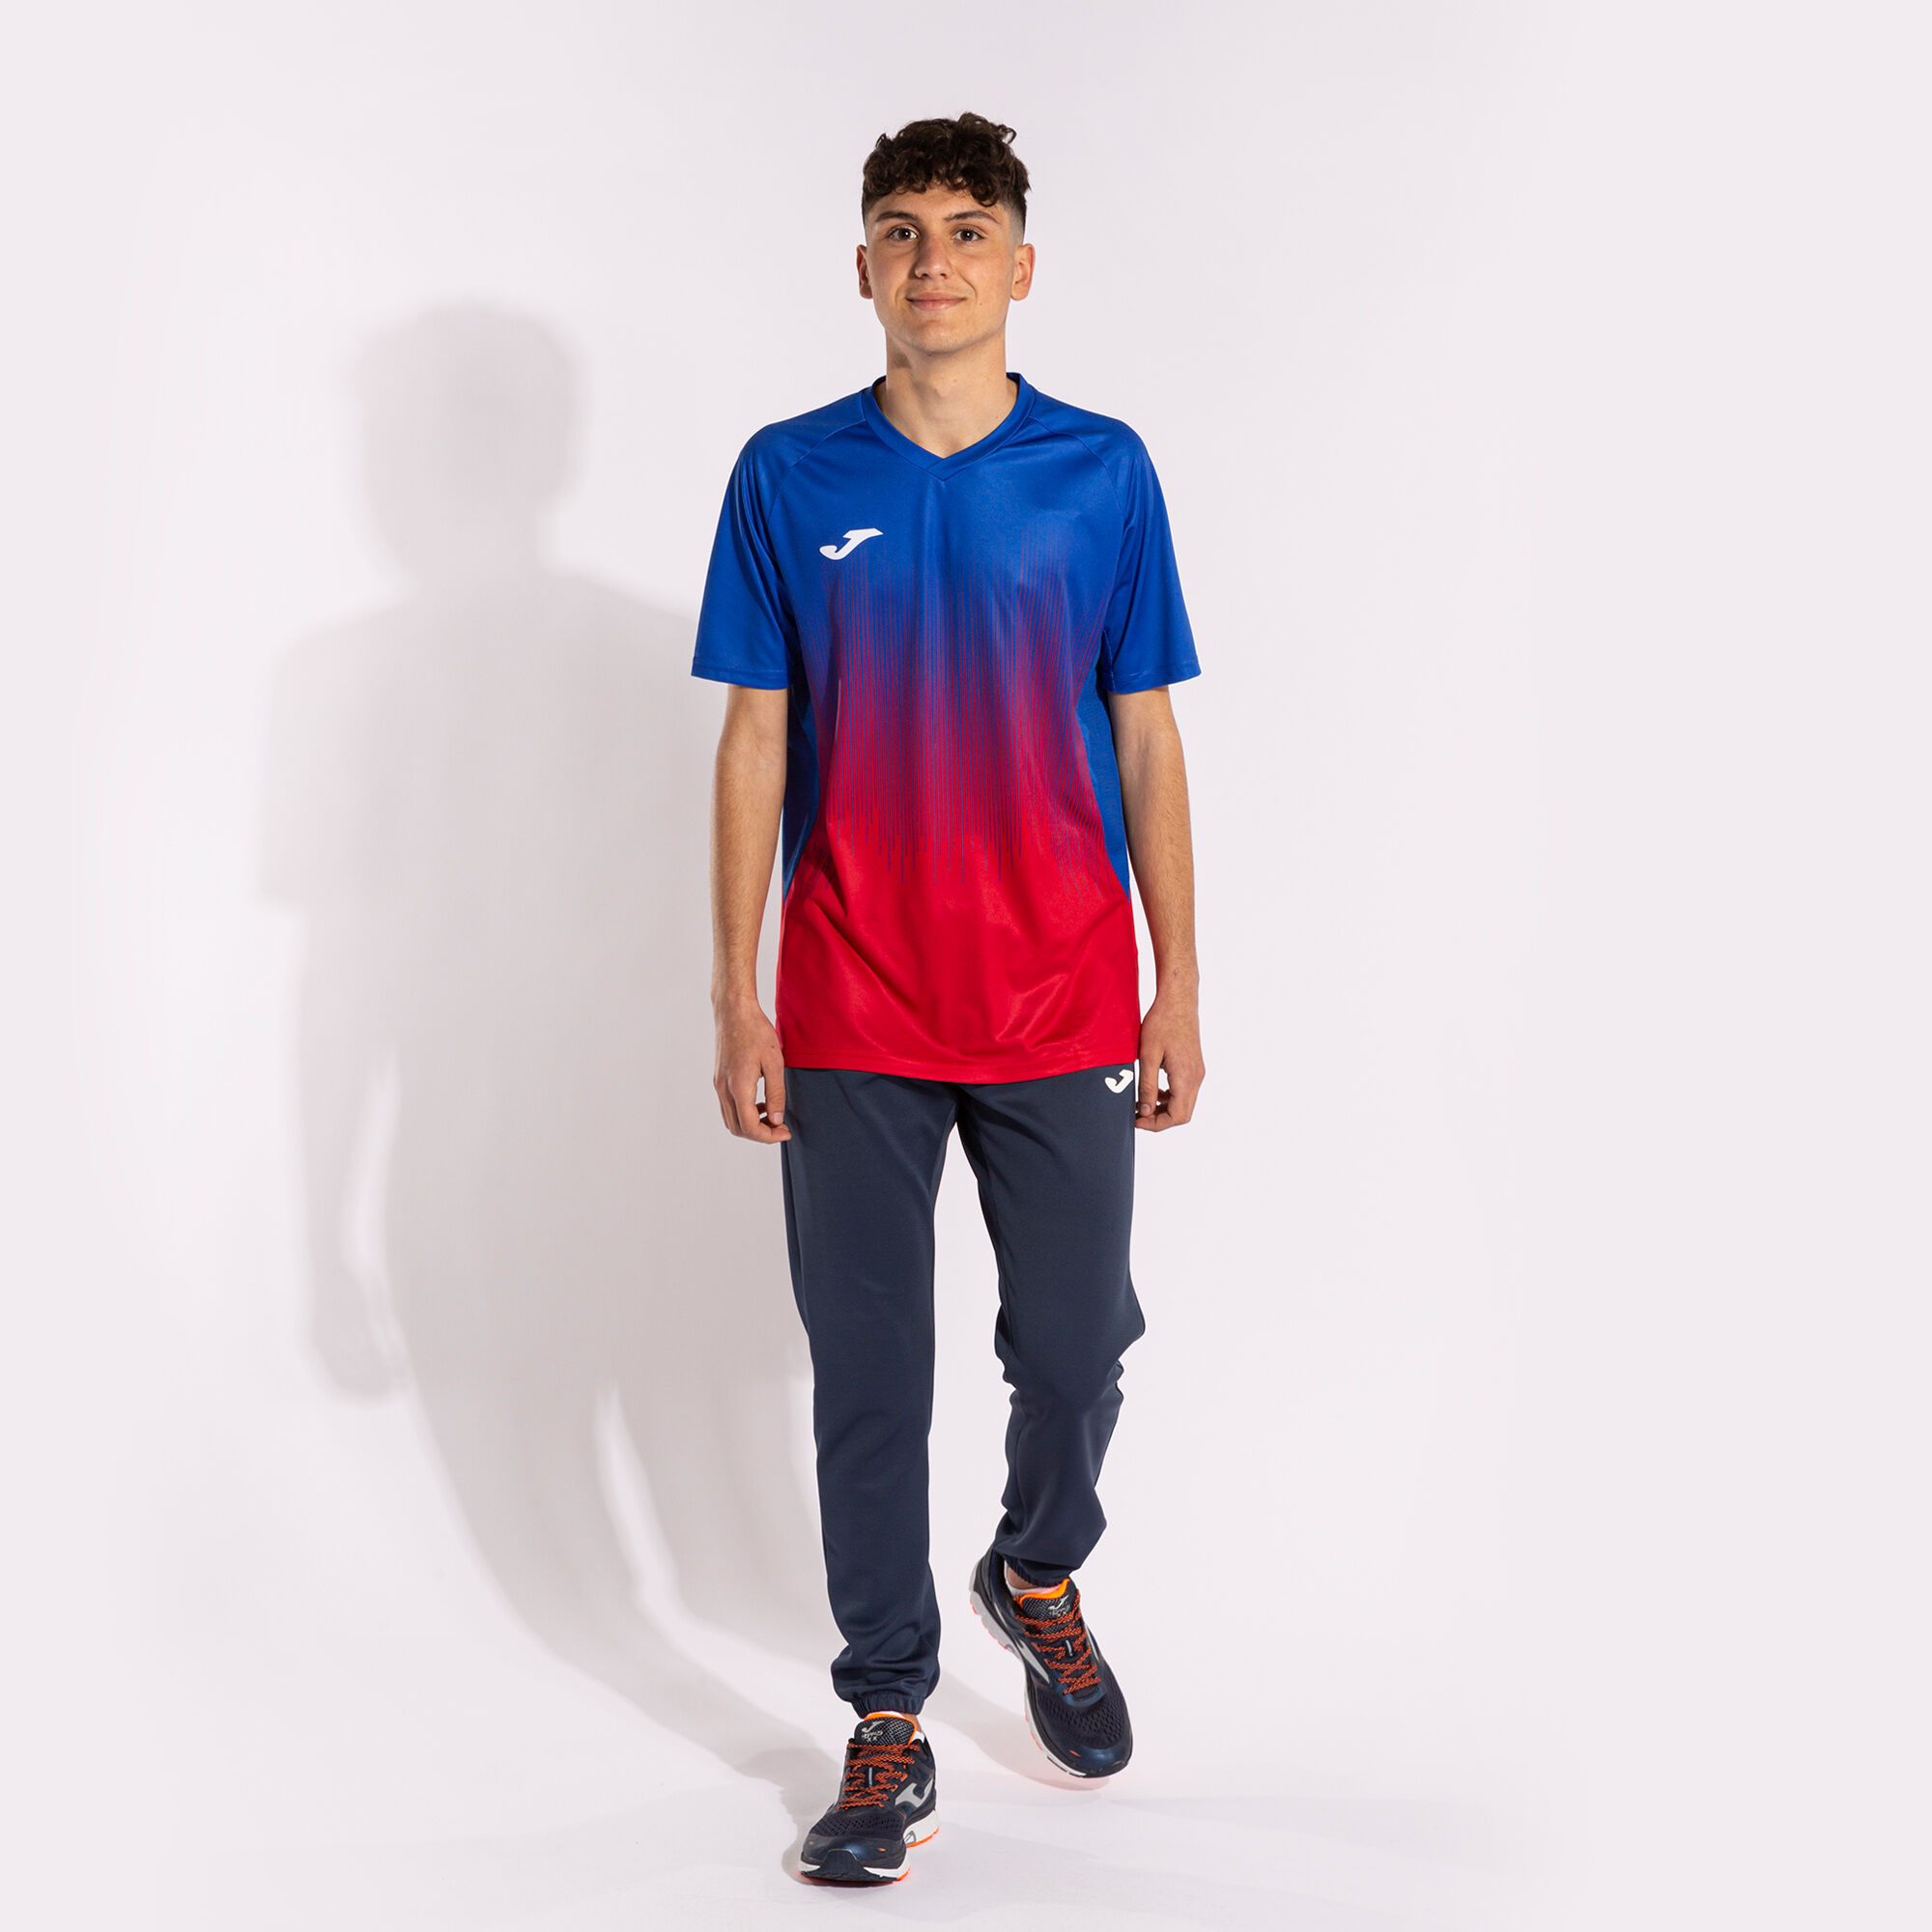 Camiseta Joma Tiger 4 rojo azul - Cero Incomodidades